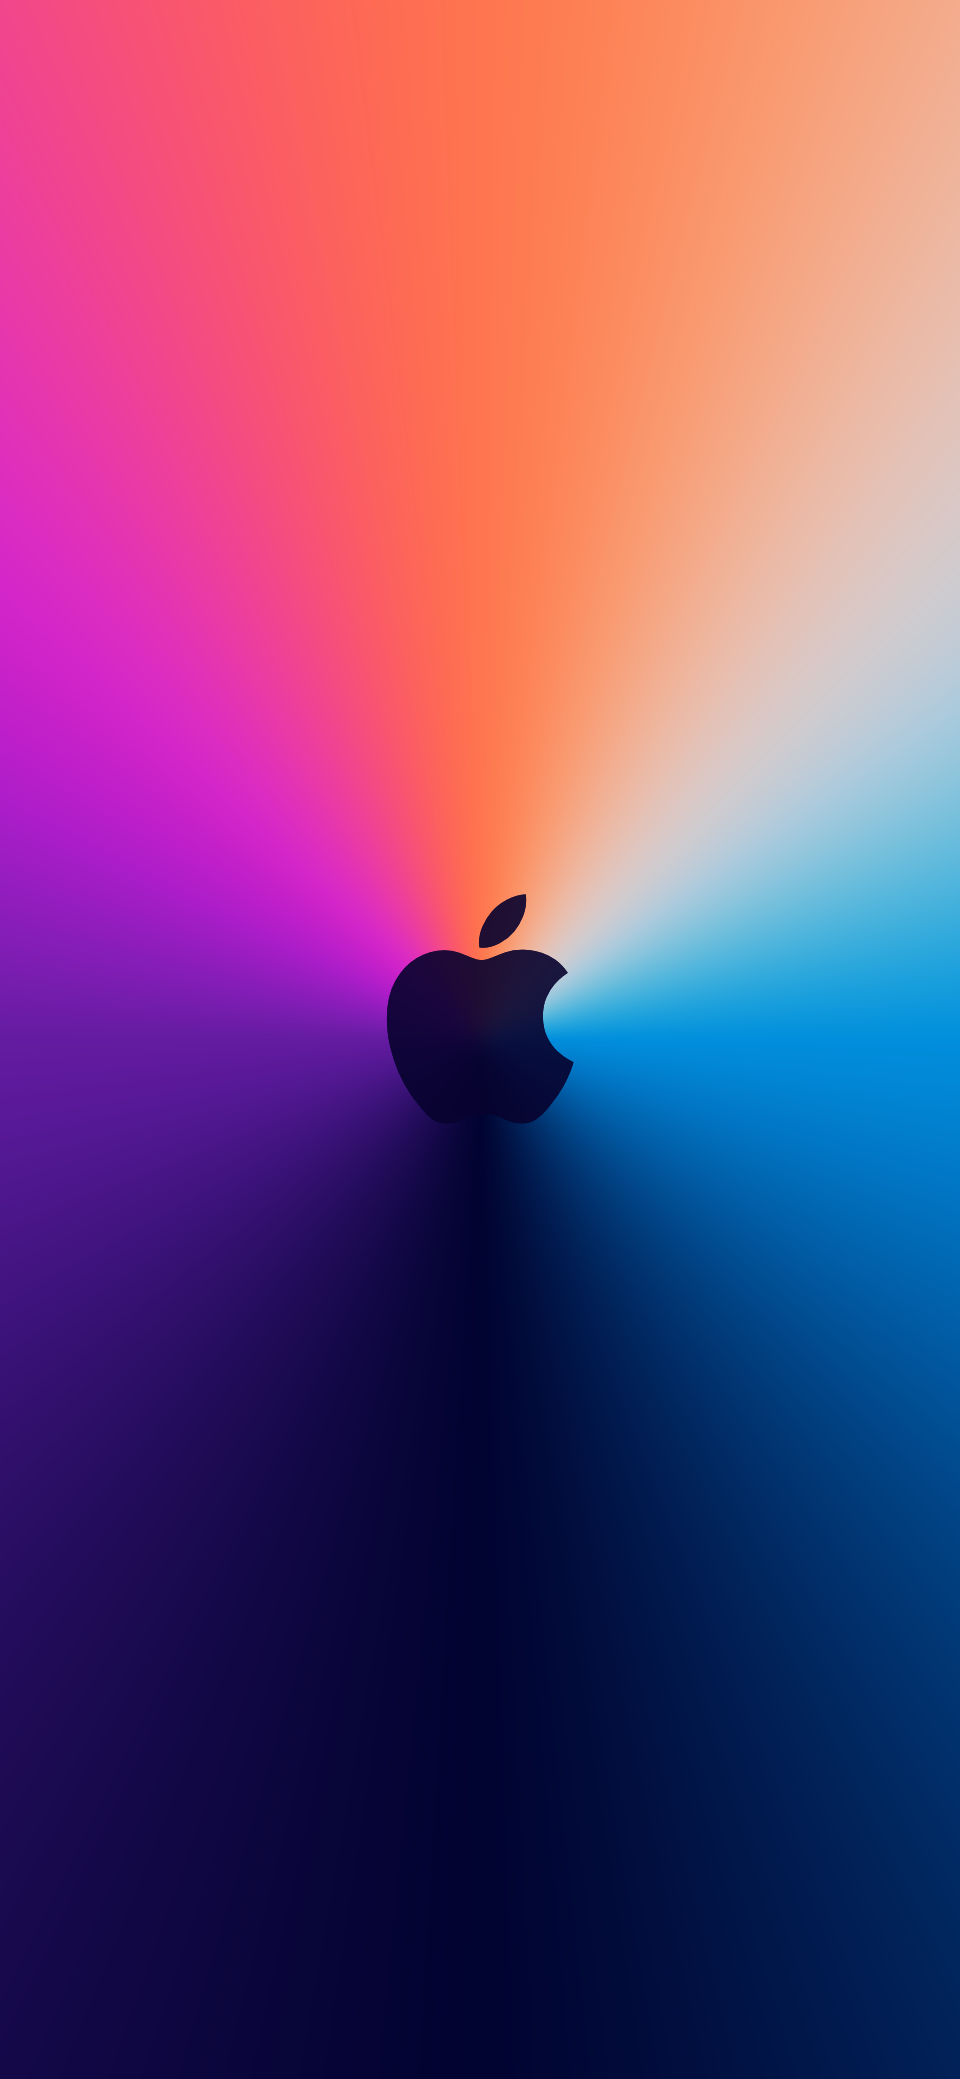 iPhone 12 Pro Max Wallpaper. Apple iphone wallpaper hd, Apple logo wallpaper iphone, Apple wallpaper iphone